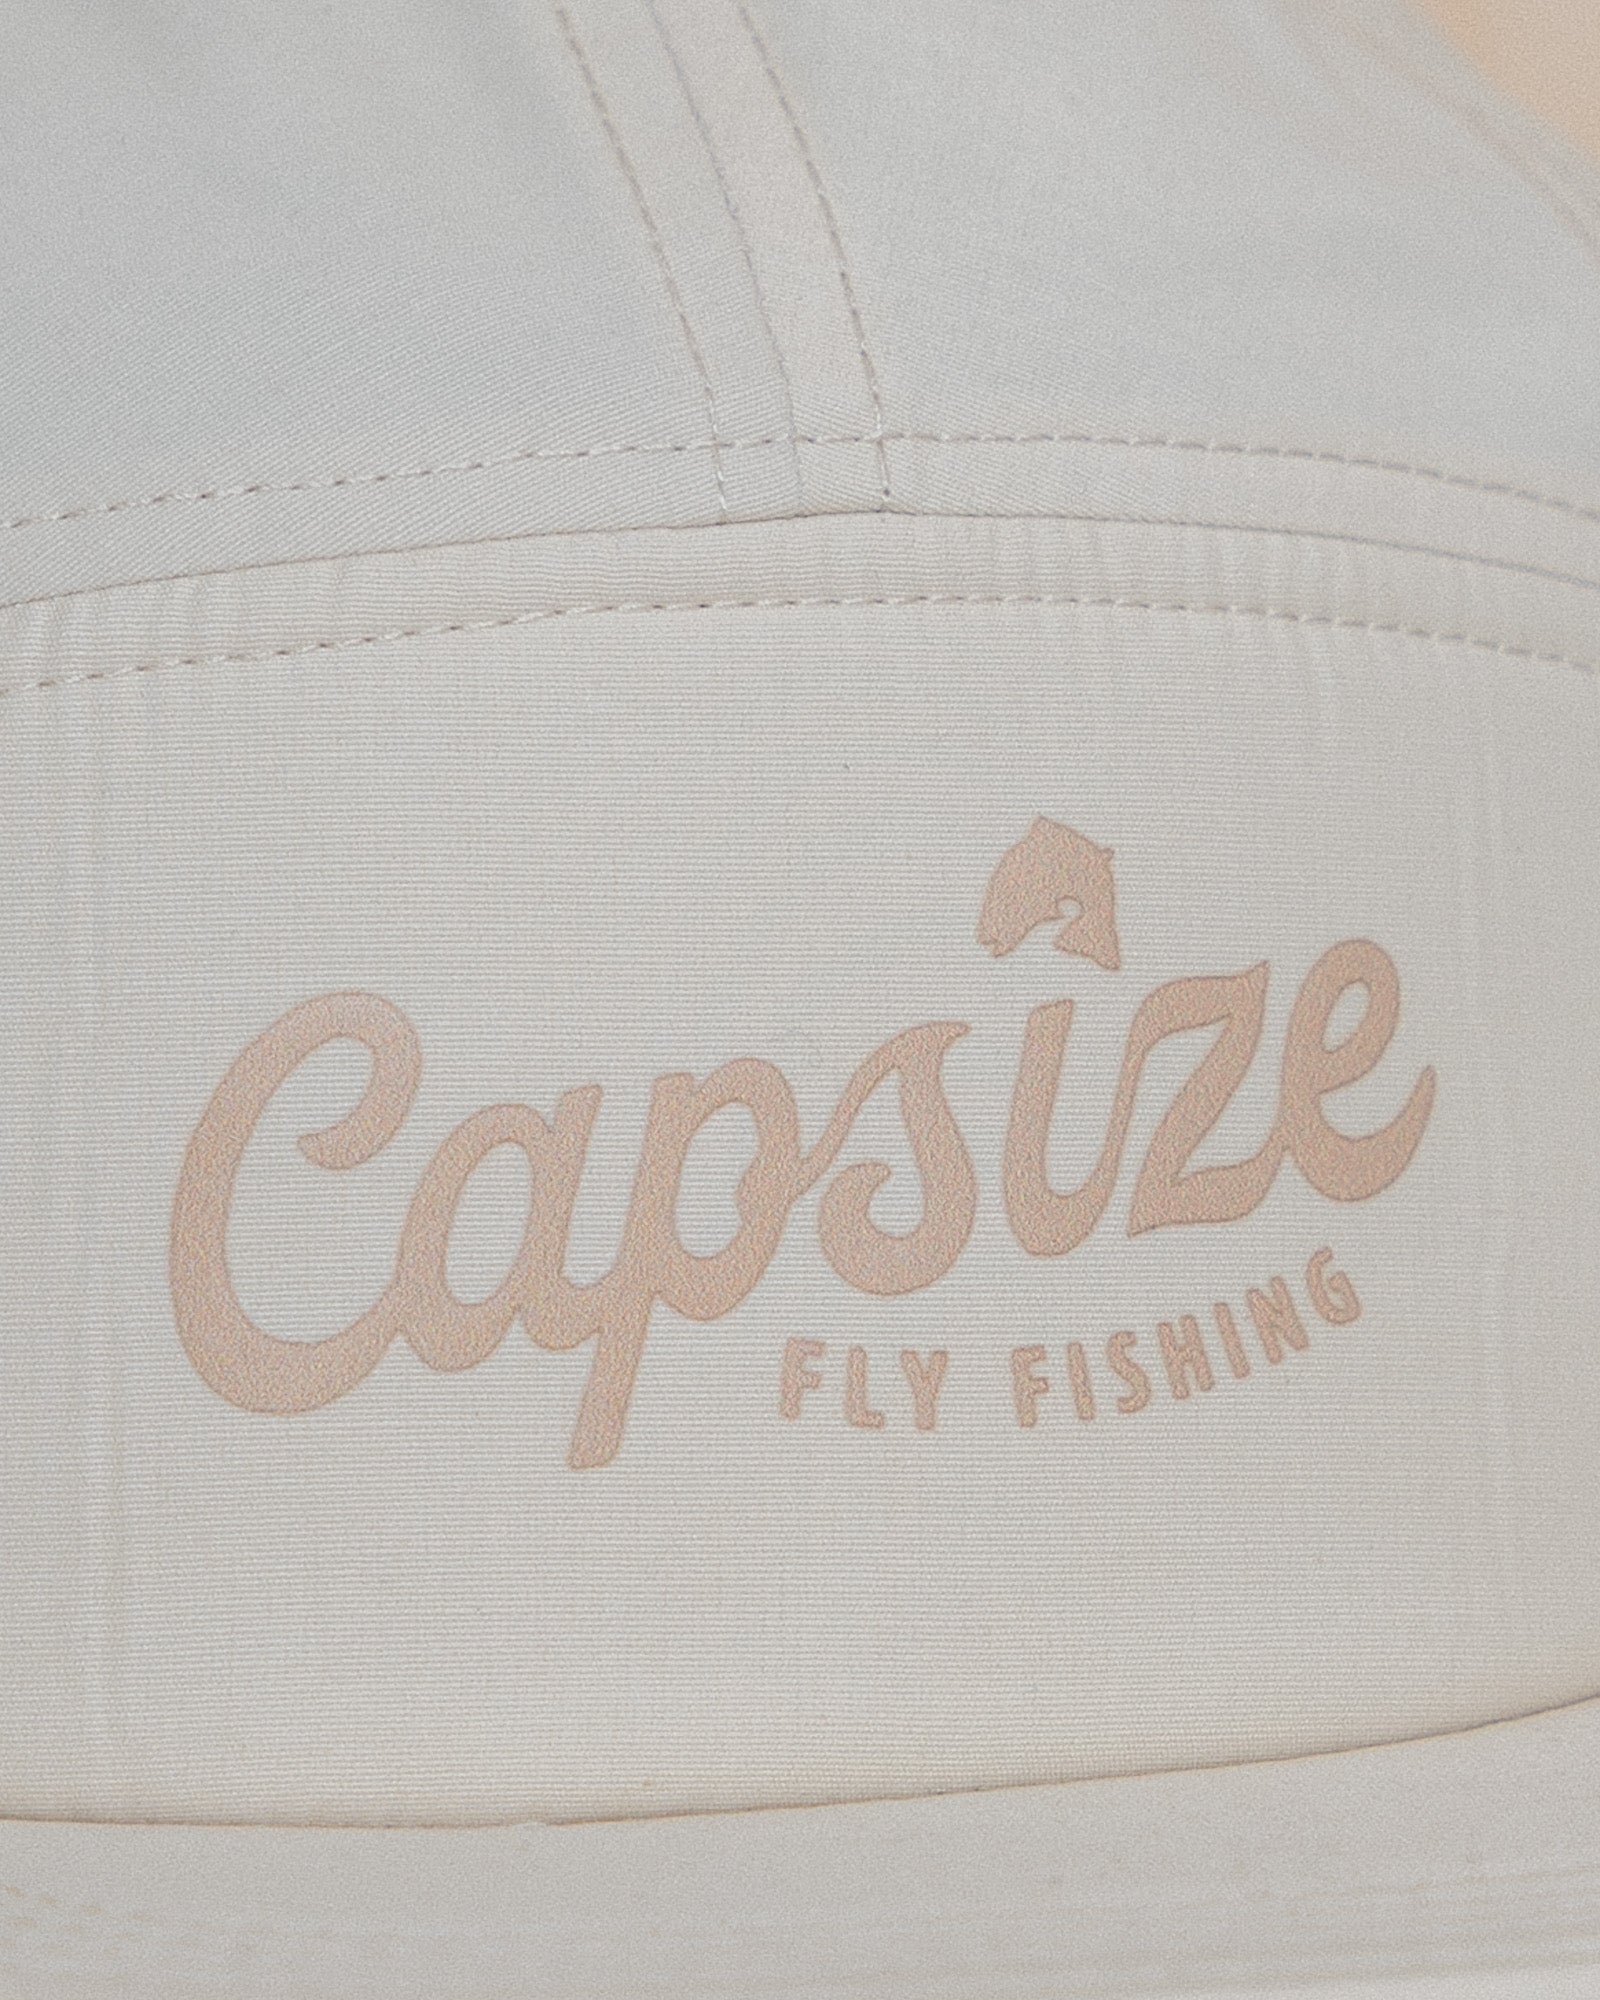 Fly Fishing Hat | Capsize Packable Sand Camper Cap